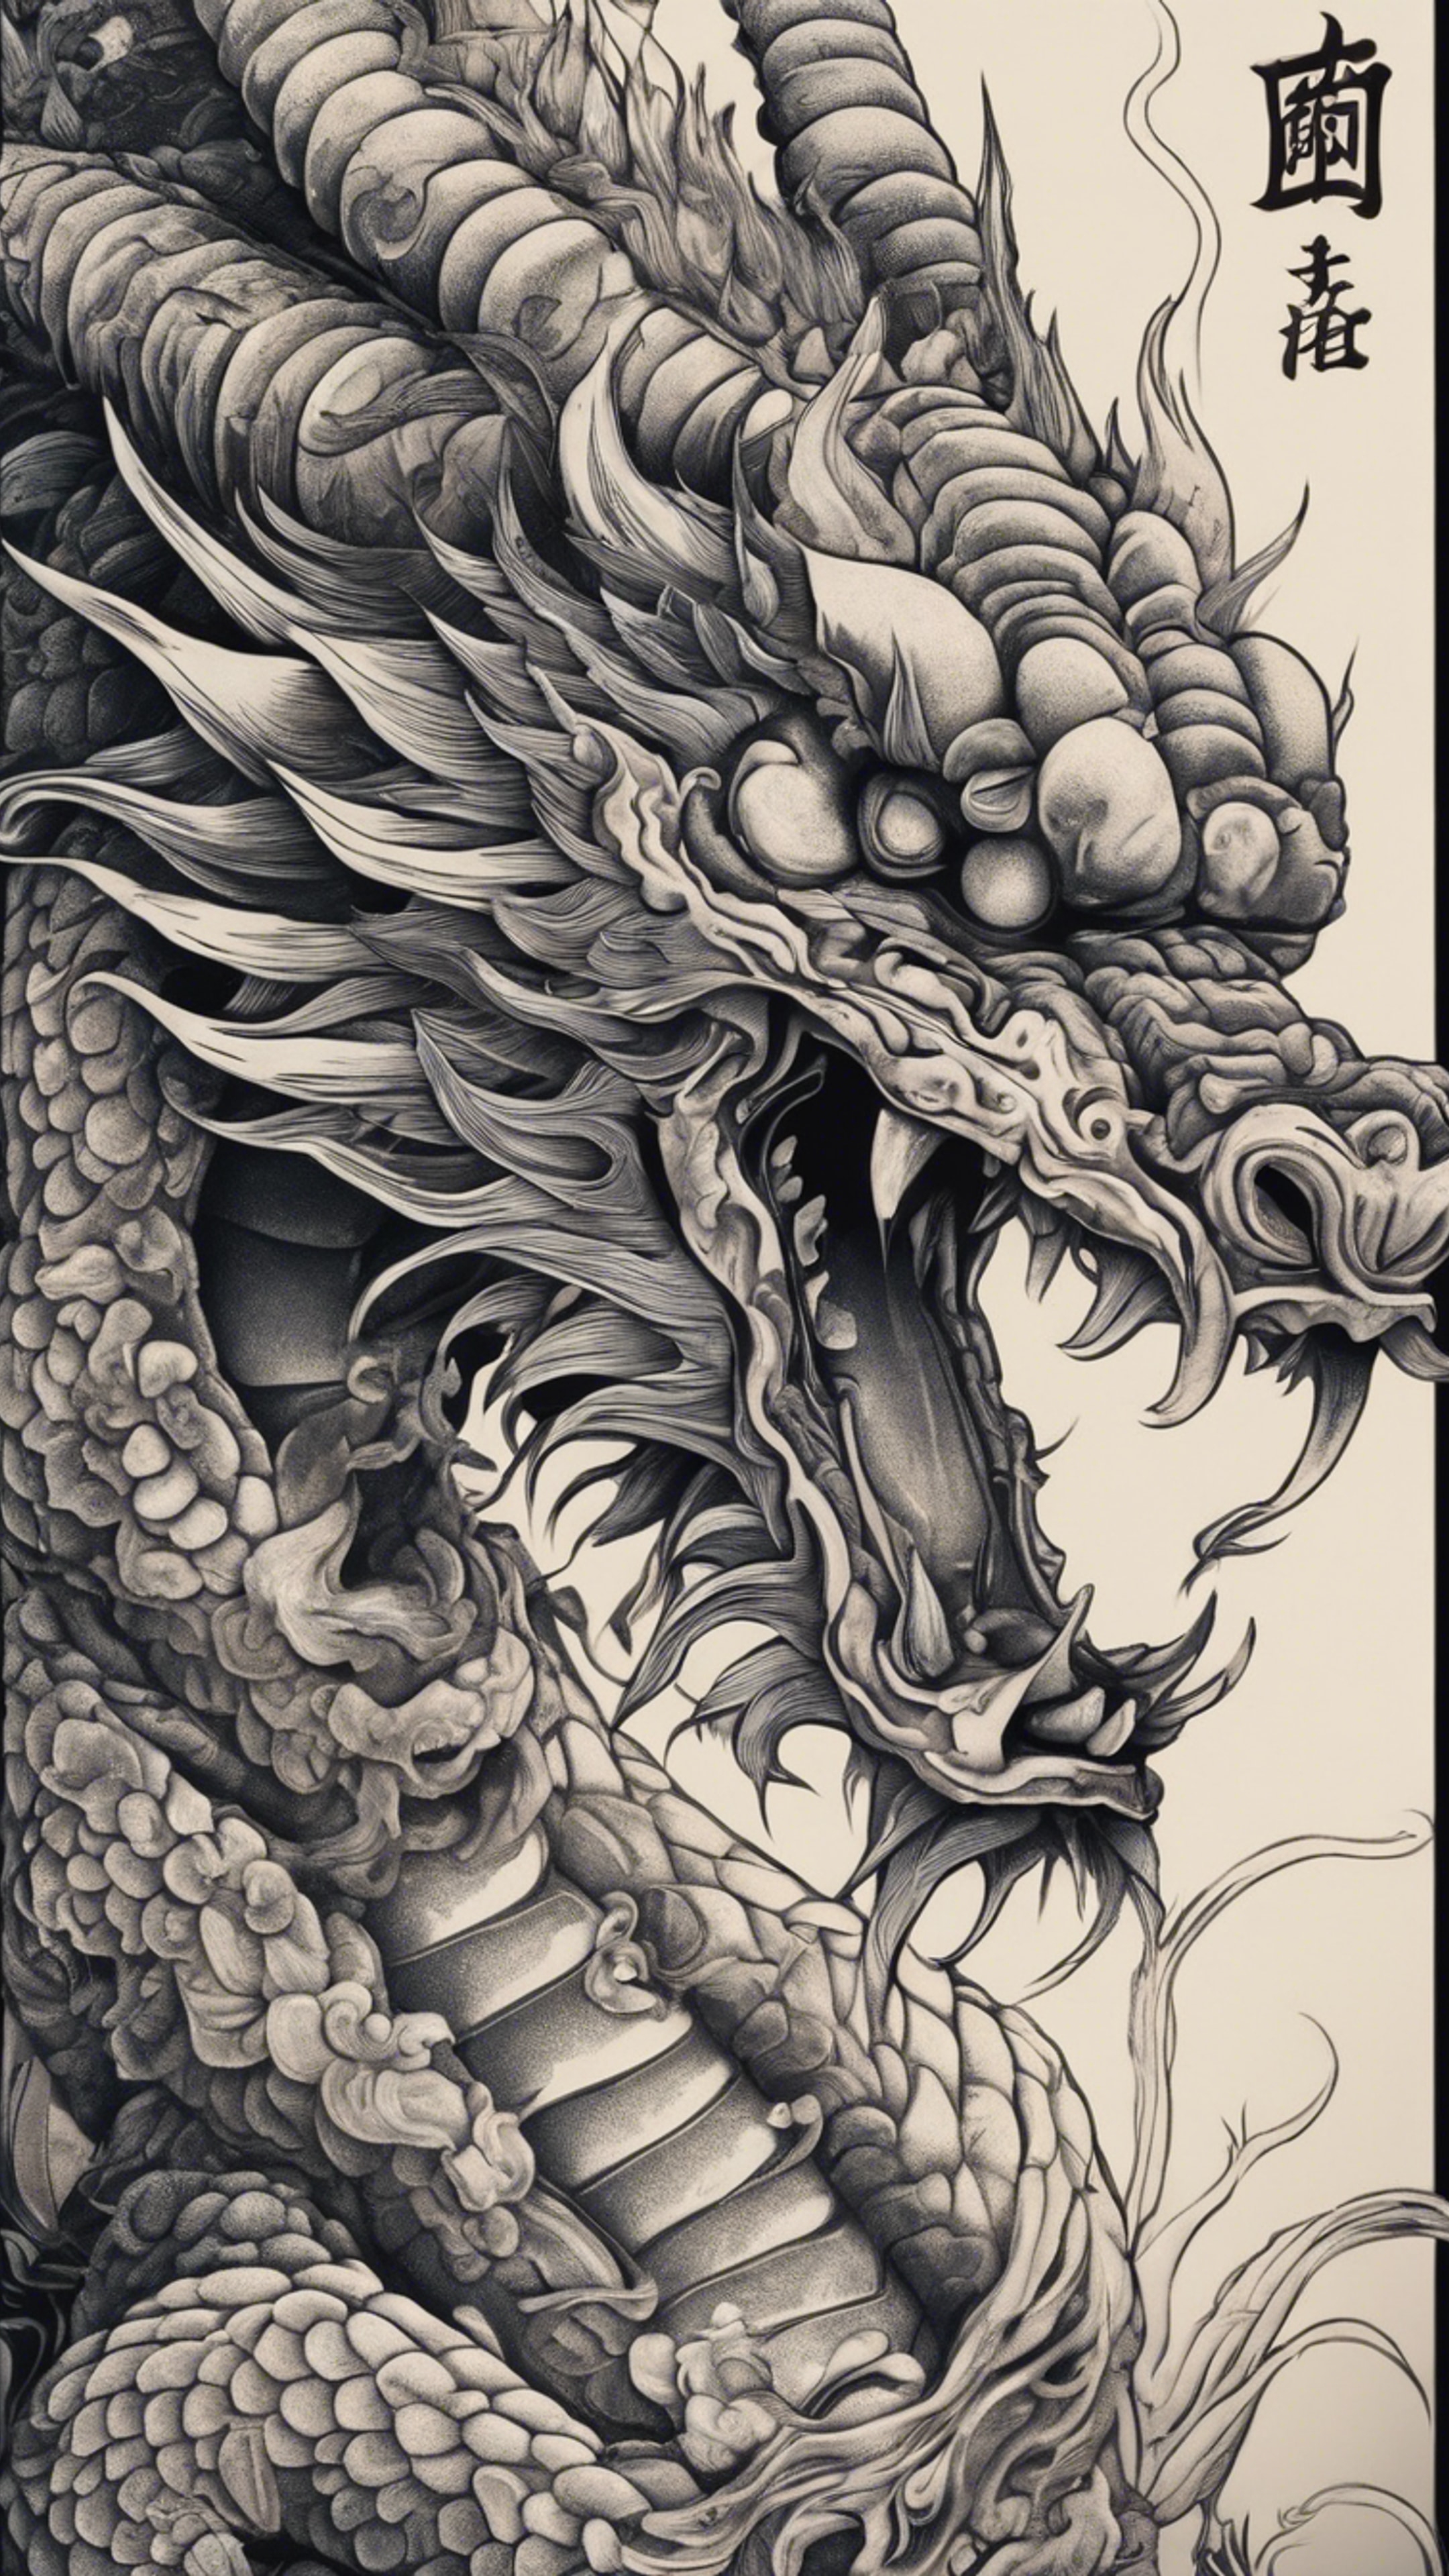 A Japanese dragon tattoo design with intricate details. Wallpaper[fa4ff1f2e6c24a2f94e4]